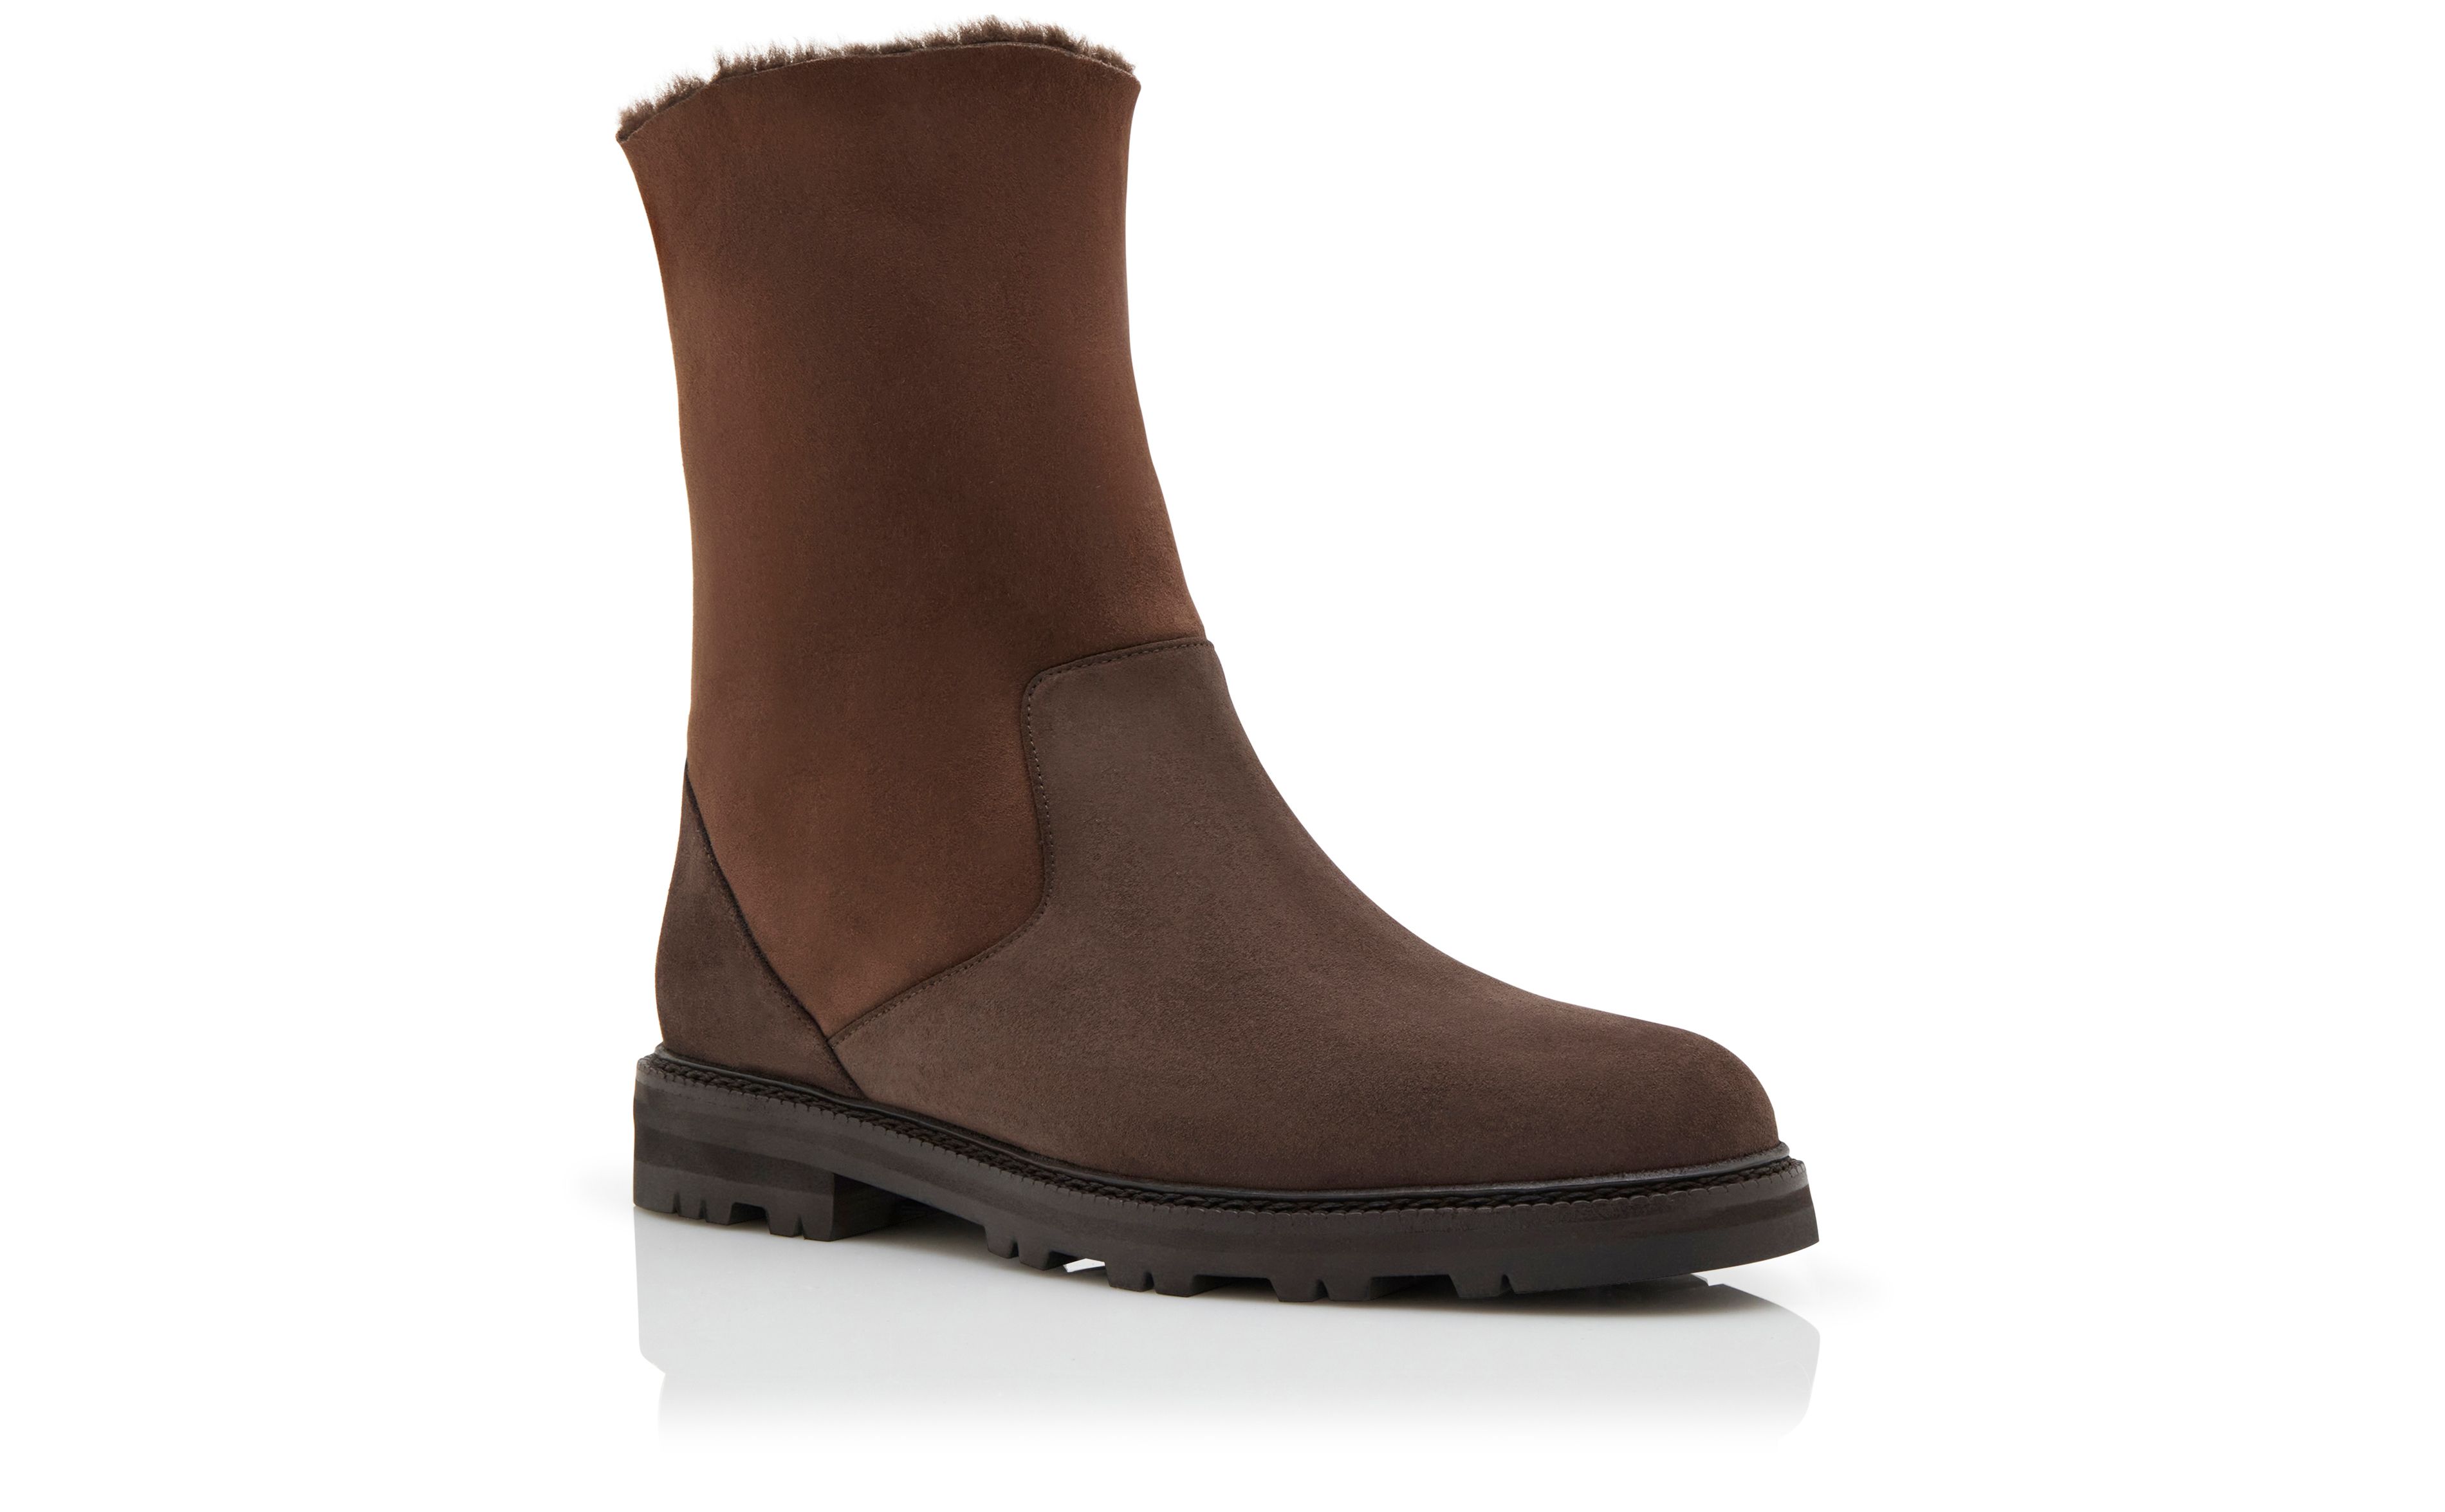 Designer Dark Brown Suede Mid Calf Boots - Image Upsell